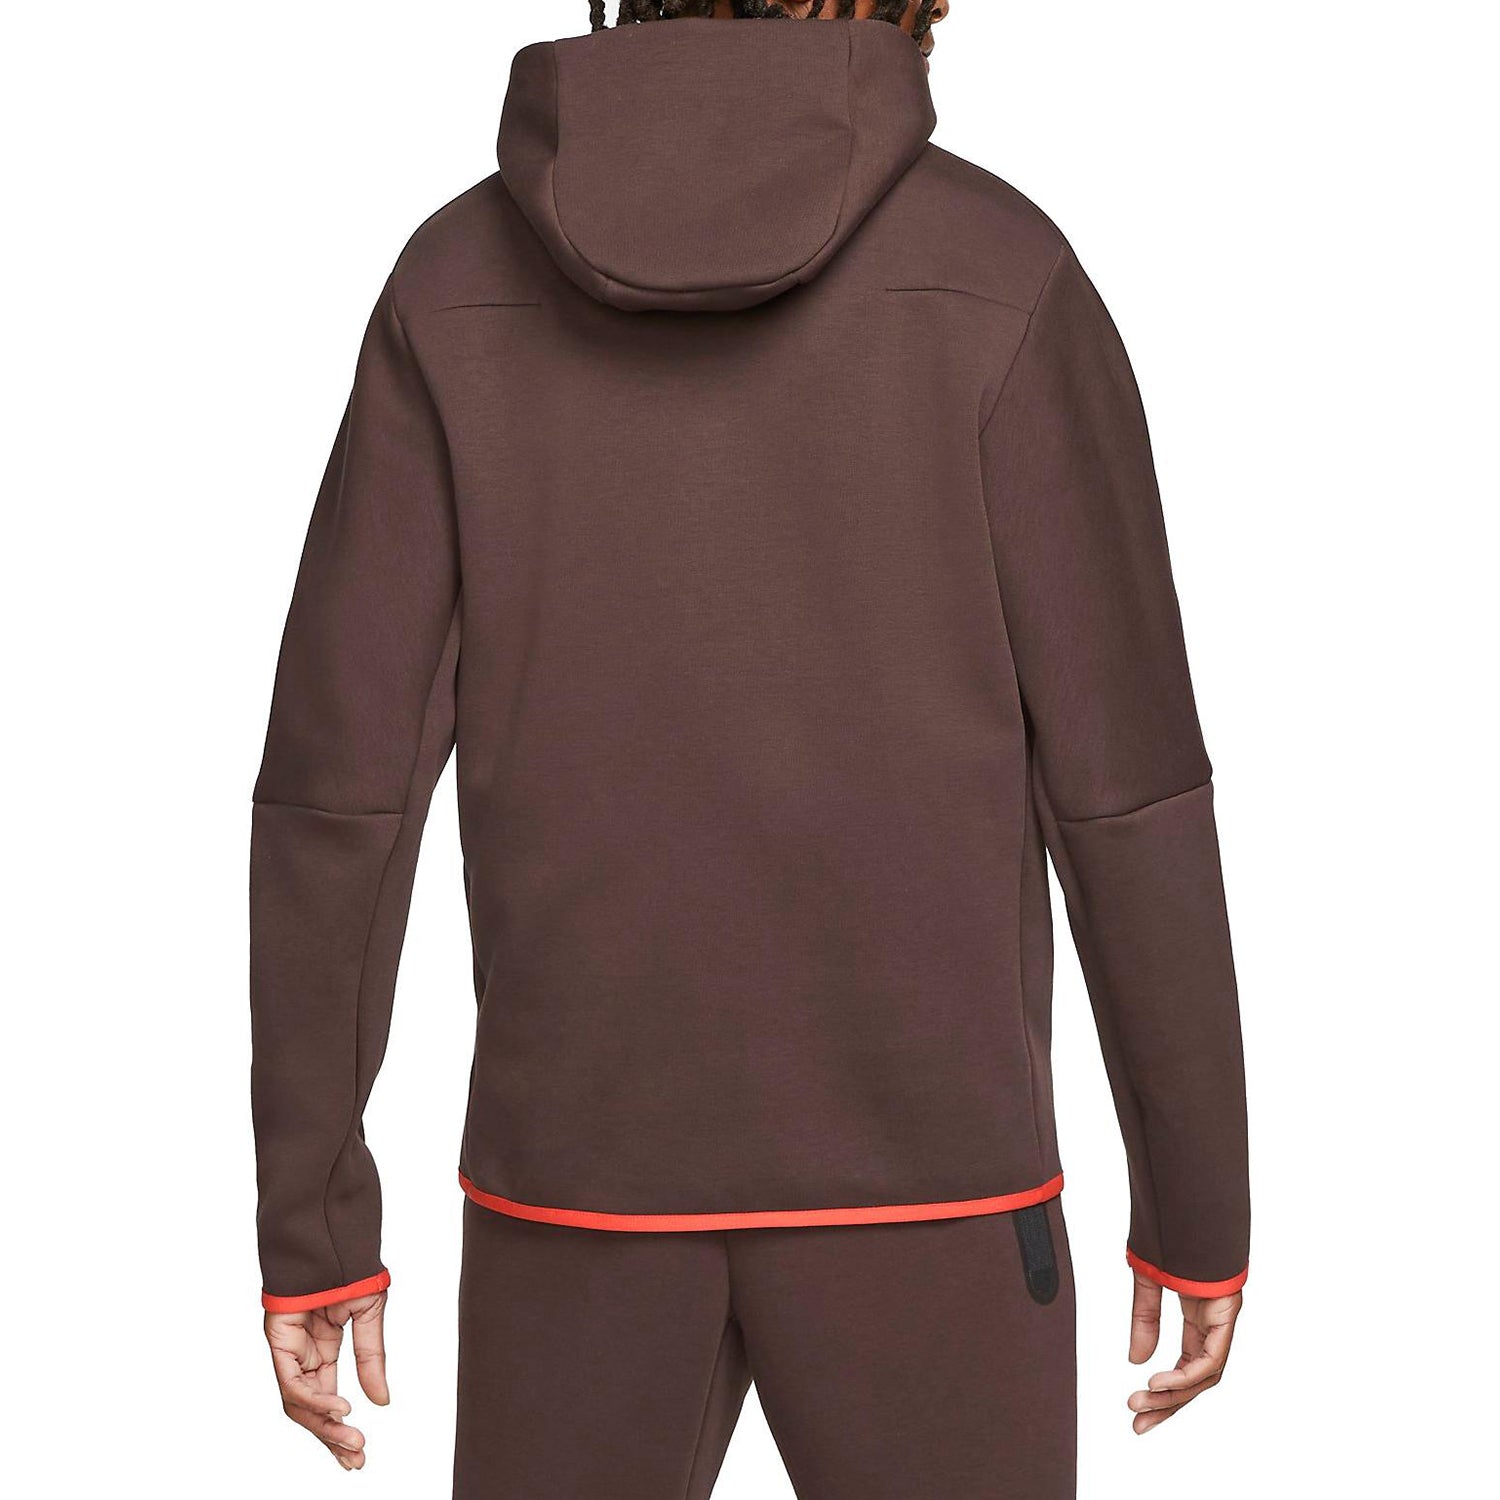 Nike Sportswear Tech Fleece Full-Zip Hoodie Brown Basalt/Pecan/Chile Red/Black